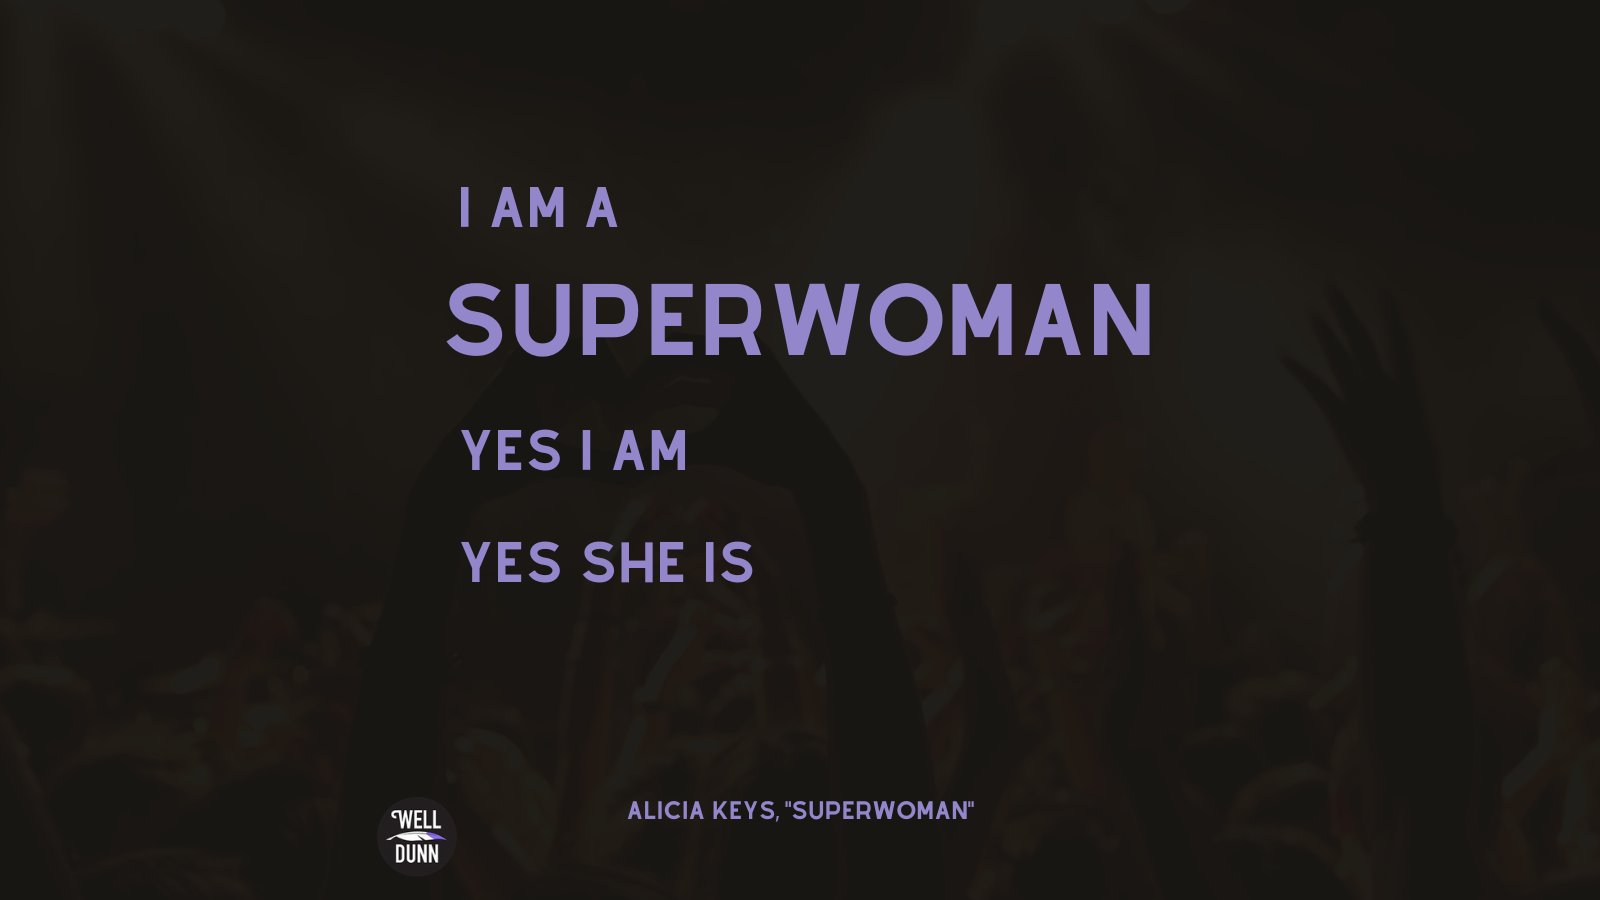 Happy Birthday to Superwomen Alicia Keys and the late Etta James!  